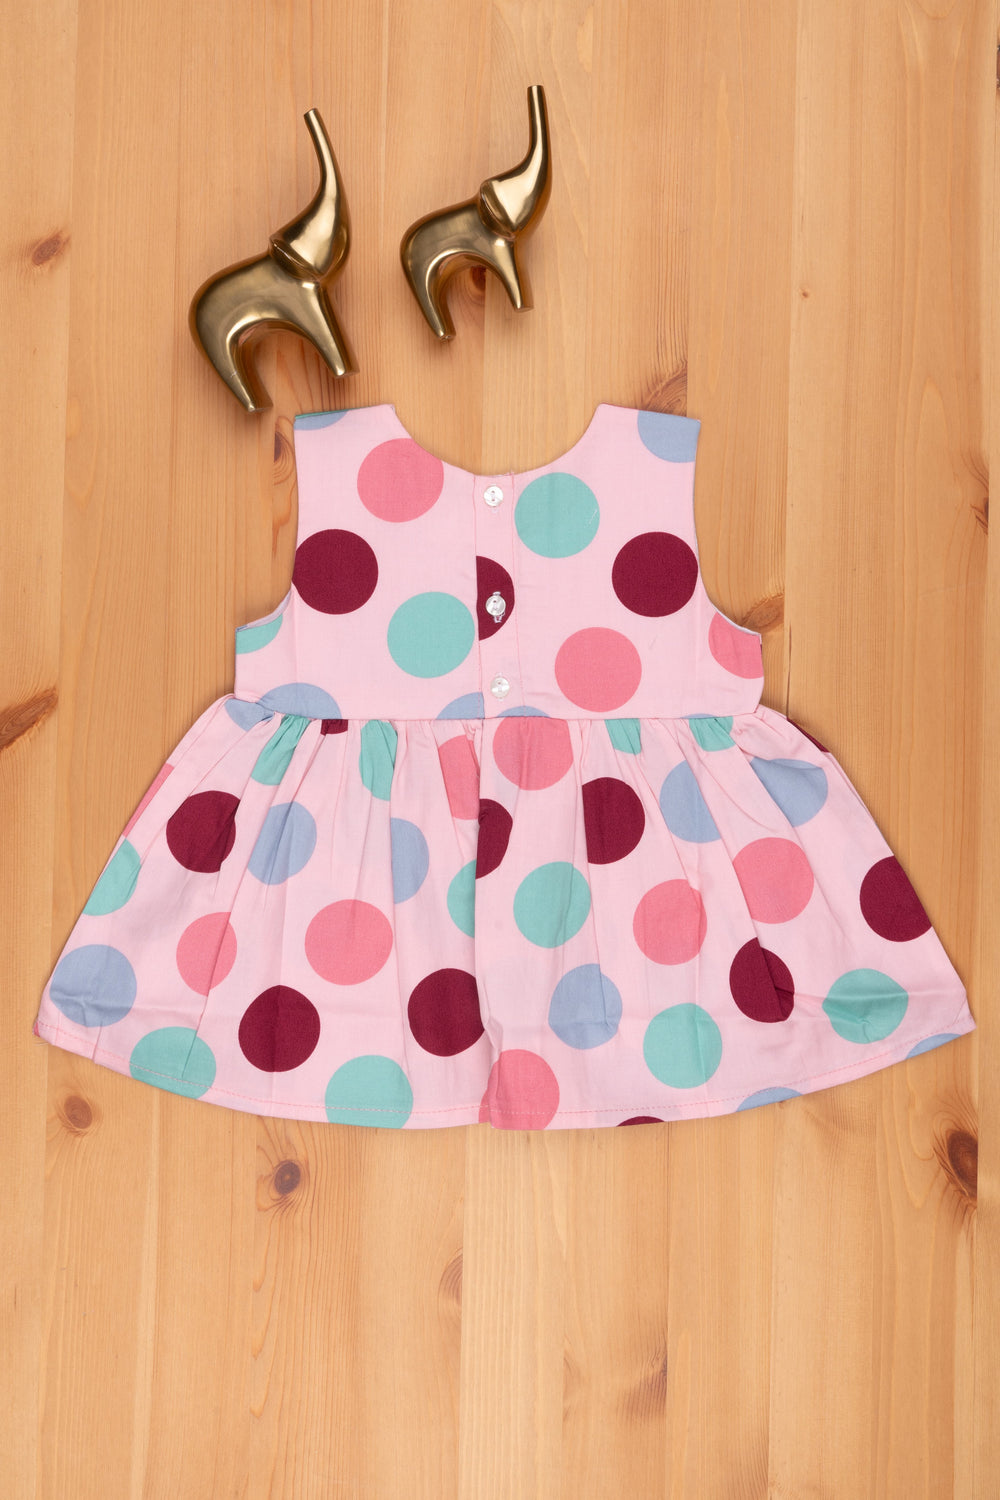 The Nesavu Baby Frock / Jhabla Chic Pink Polka Dot Outfit - Perfect for Newborn Girls Nesavu Fancy Dresses For baby Girls | Buy Pink Baby Frocks online | The Nesavu